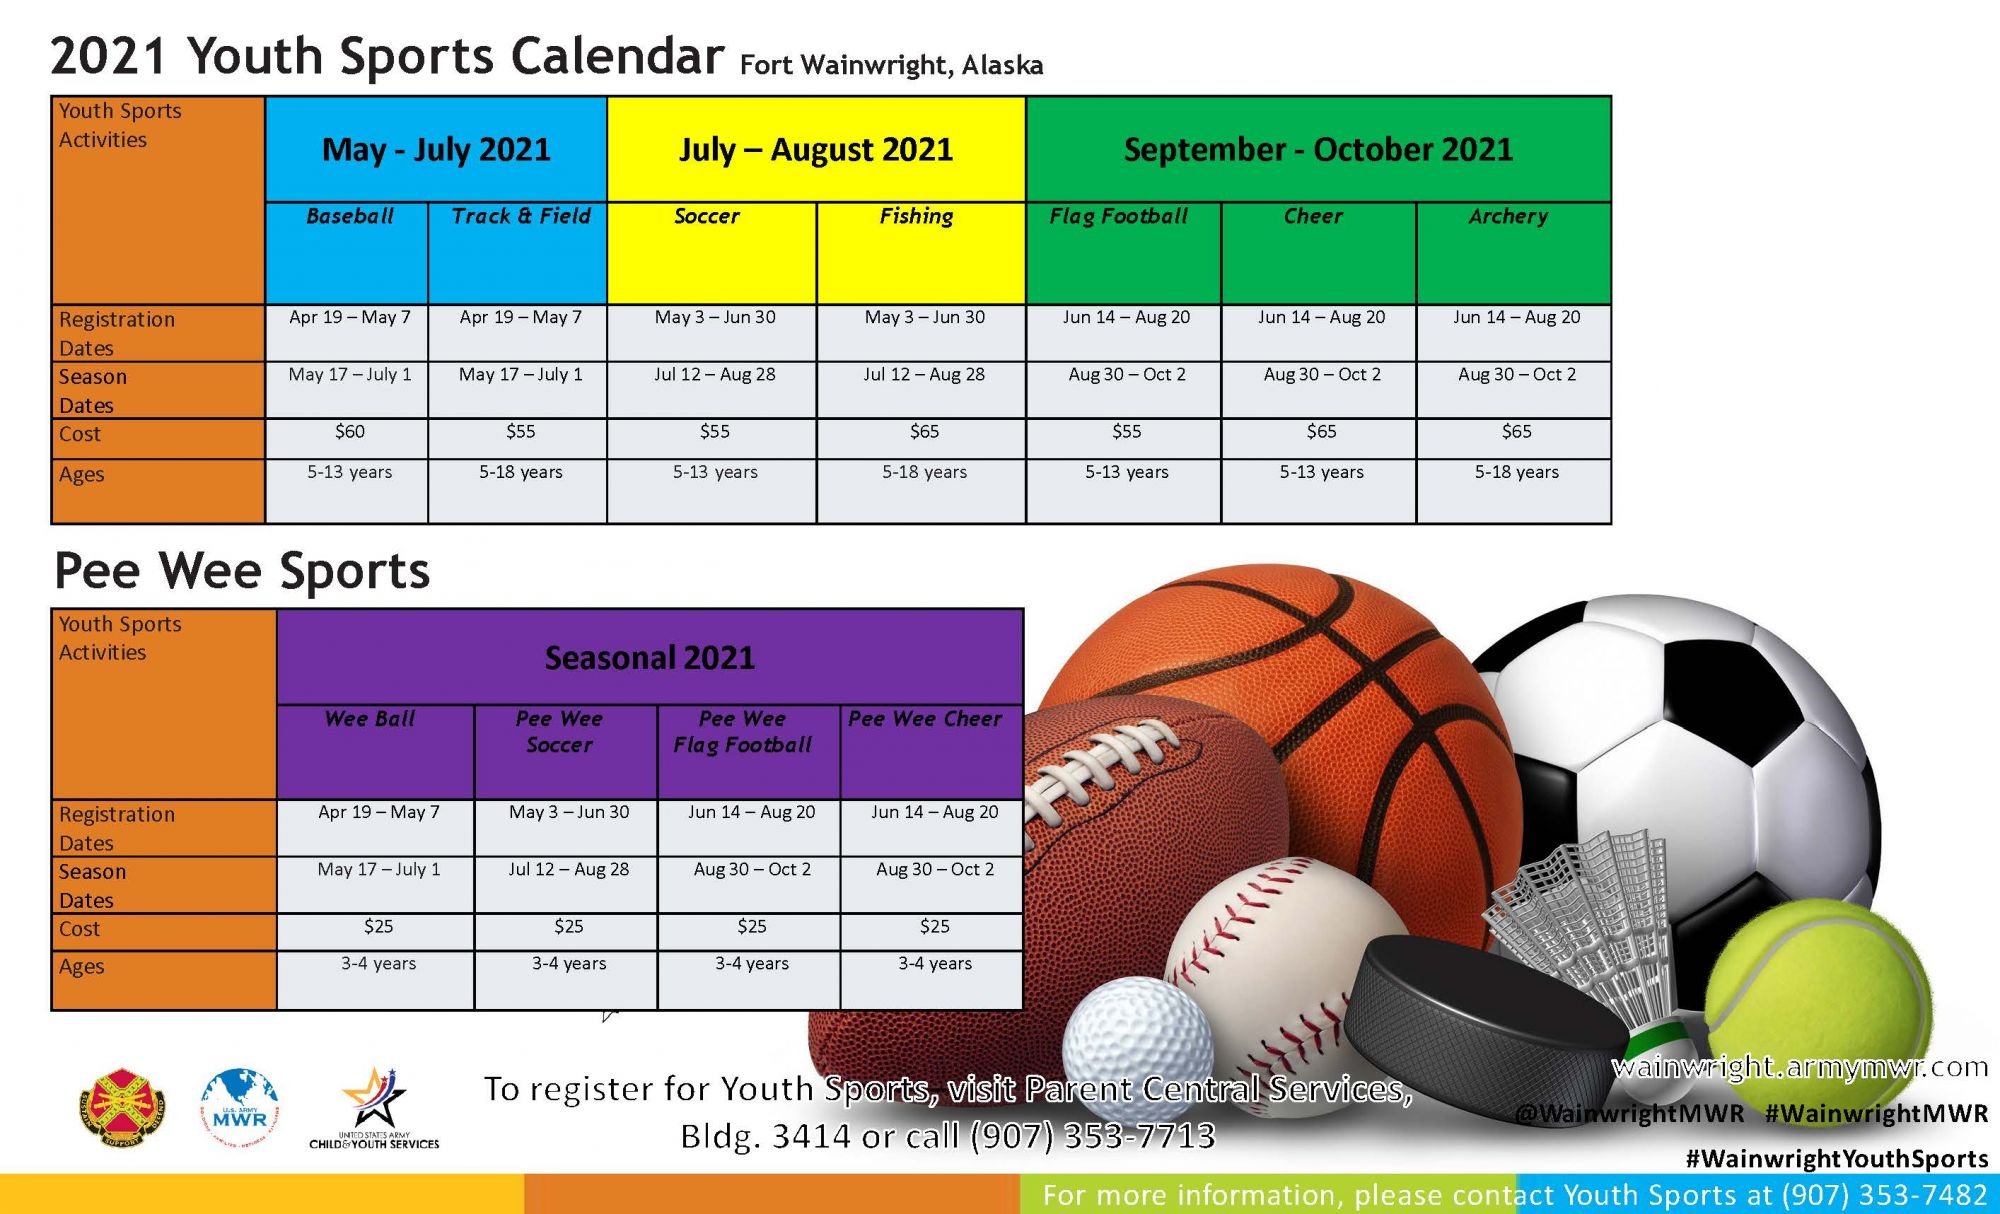 Wainwright_CYS_Youth Sports Calendar May-Aug 2021_1_Page_2.jpg